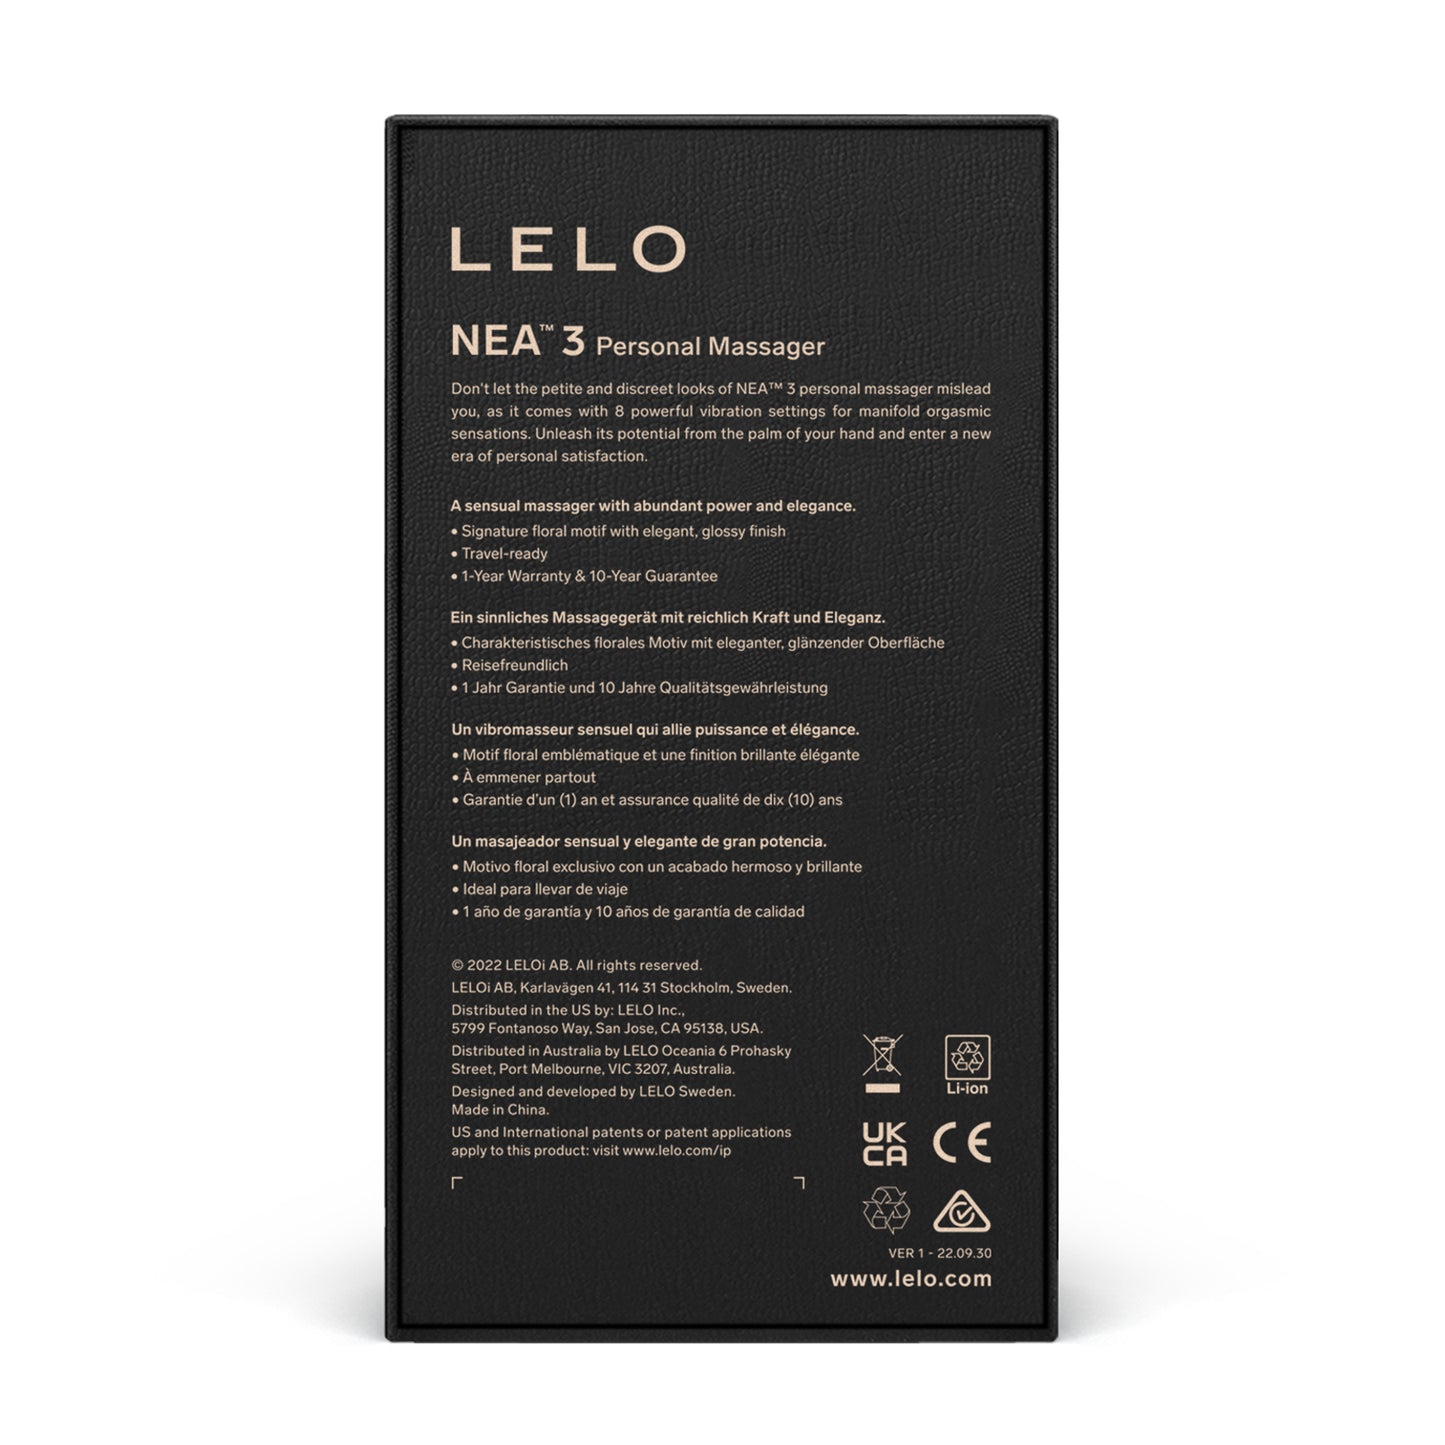 Lelo - Nea 3 Personal Massager Pitch Black - 4